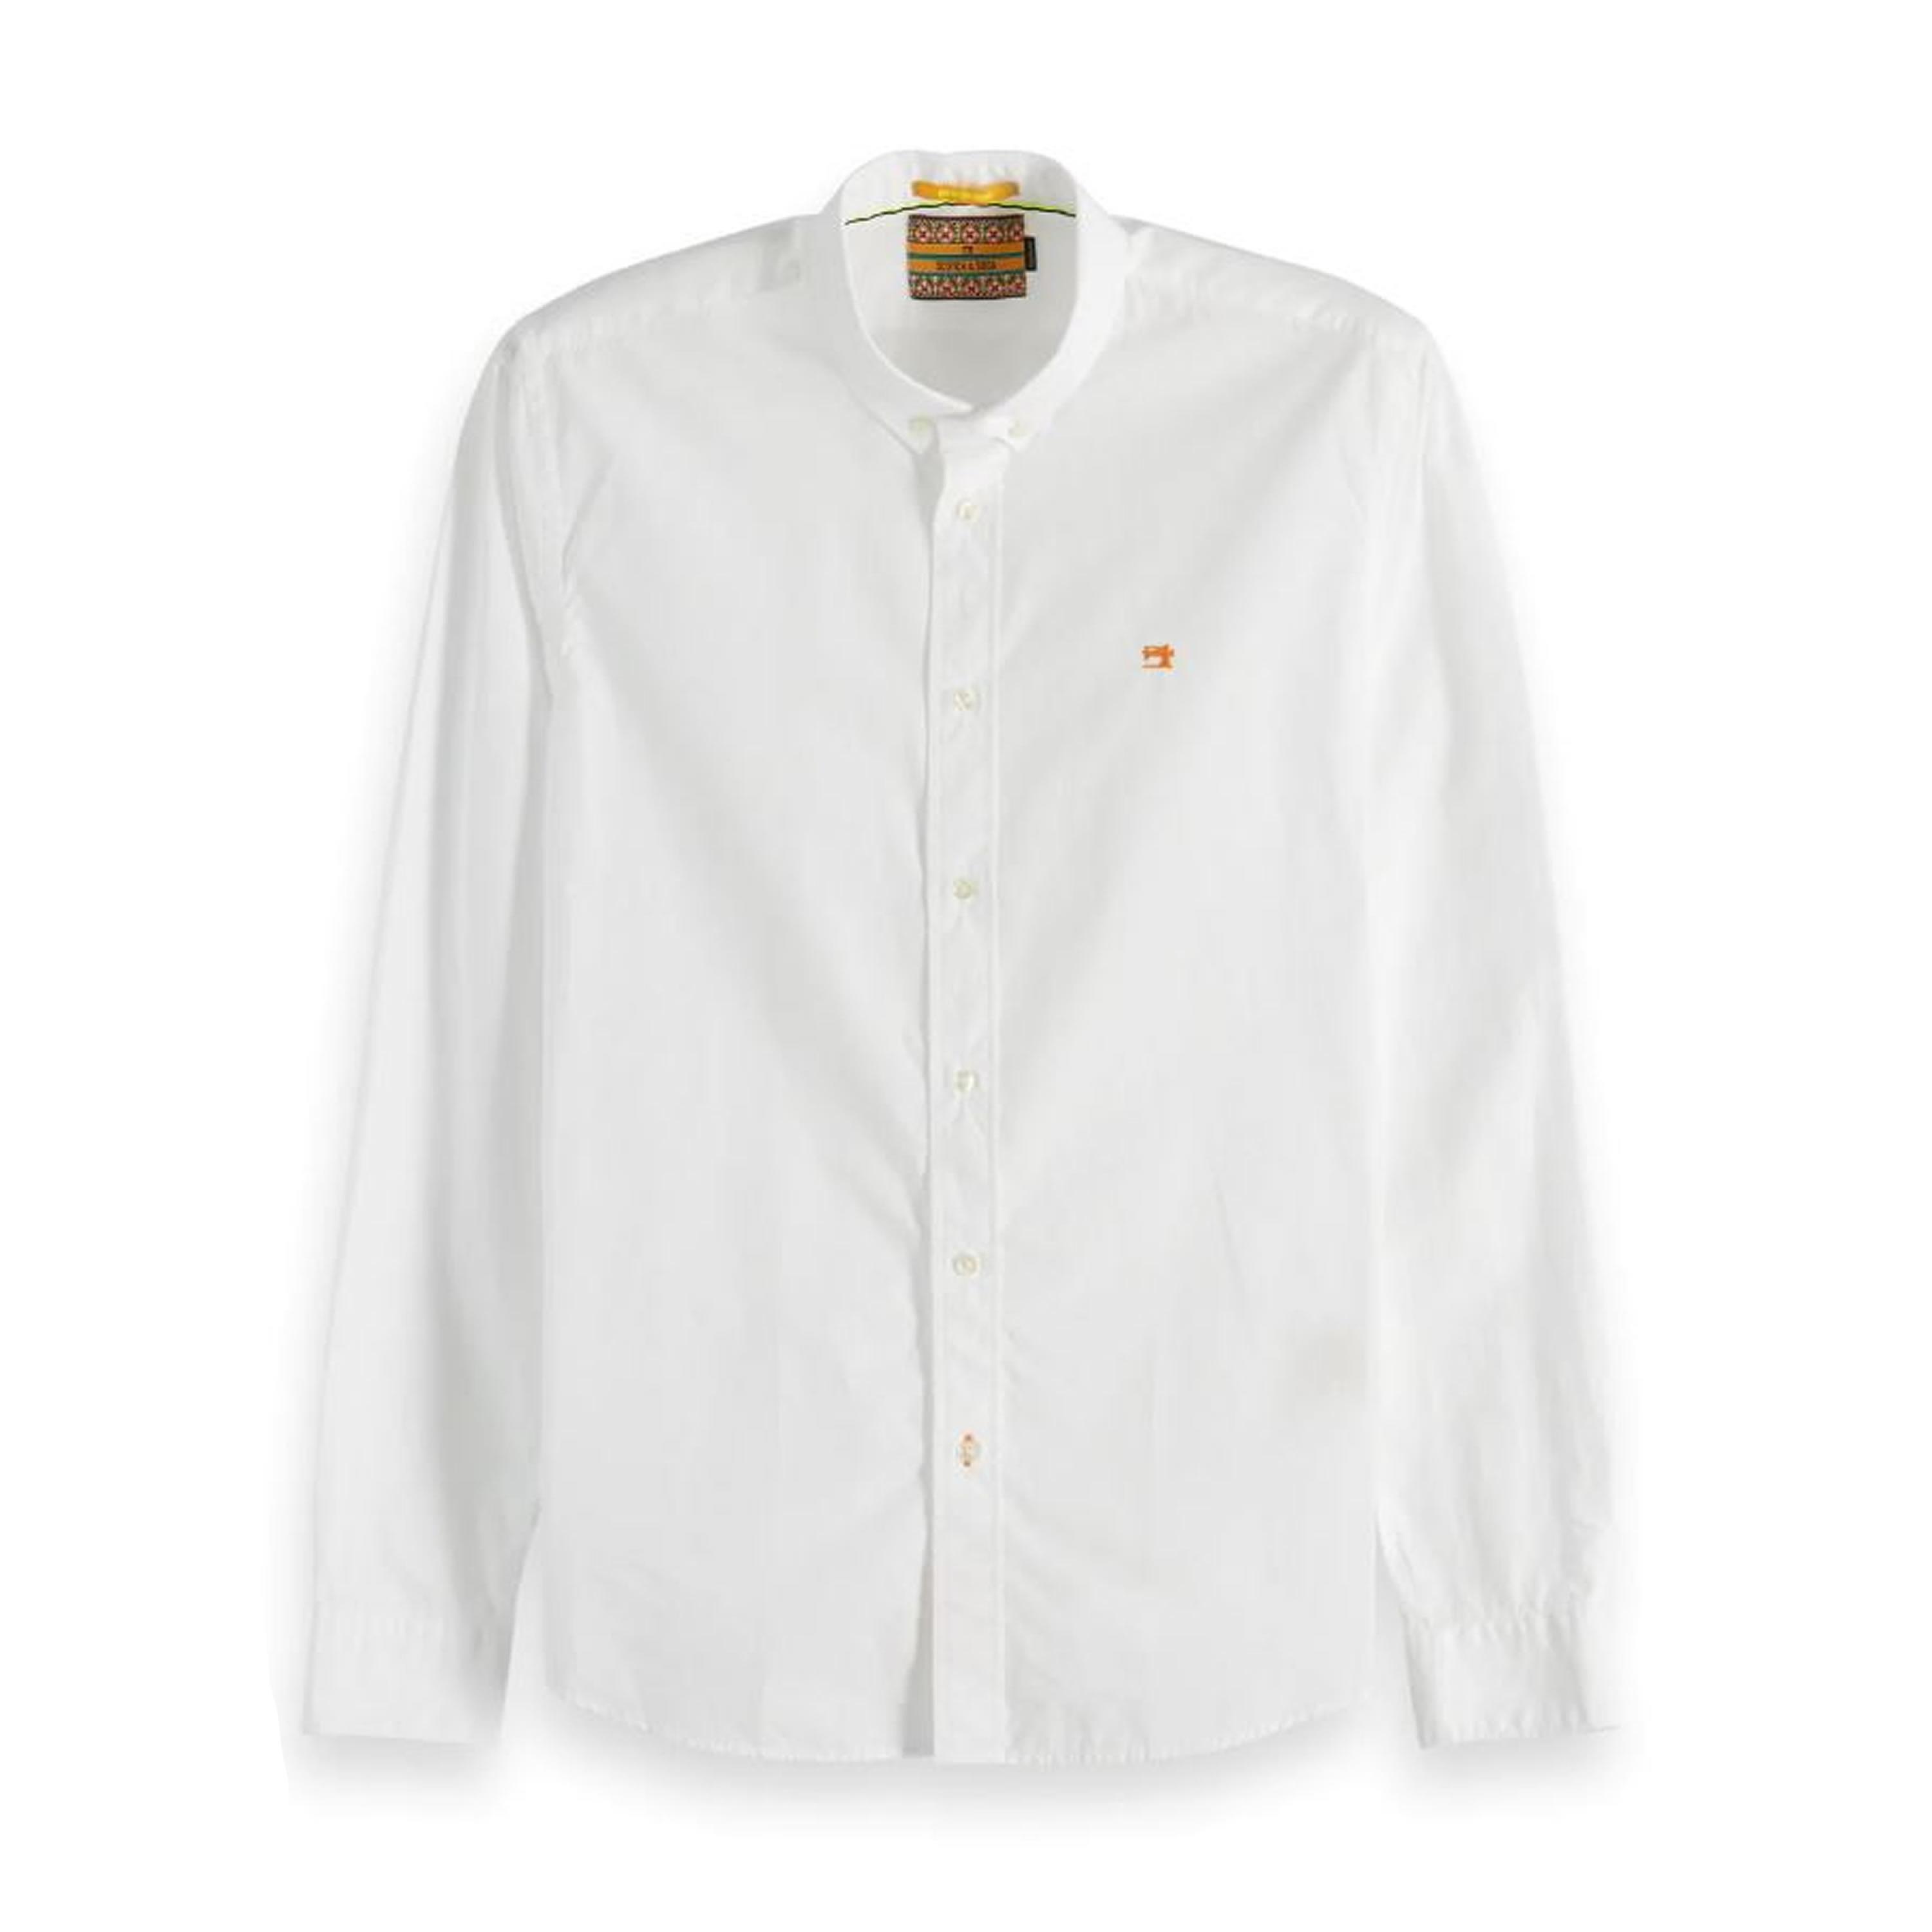 Scotch & Soda Cotton Basic Regular Fit Shirt in White for Men - Lyst